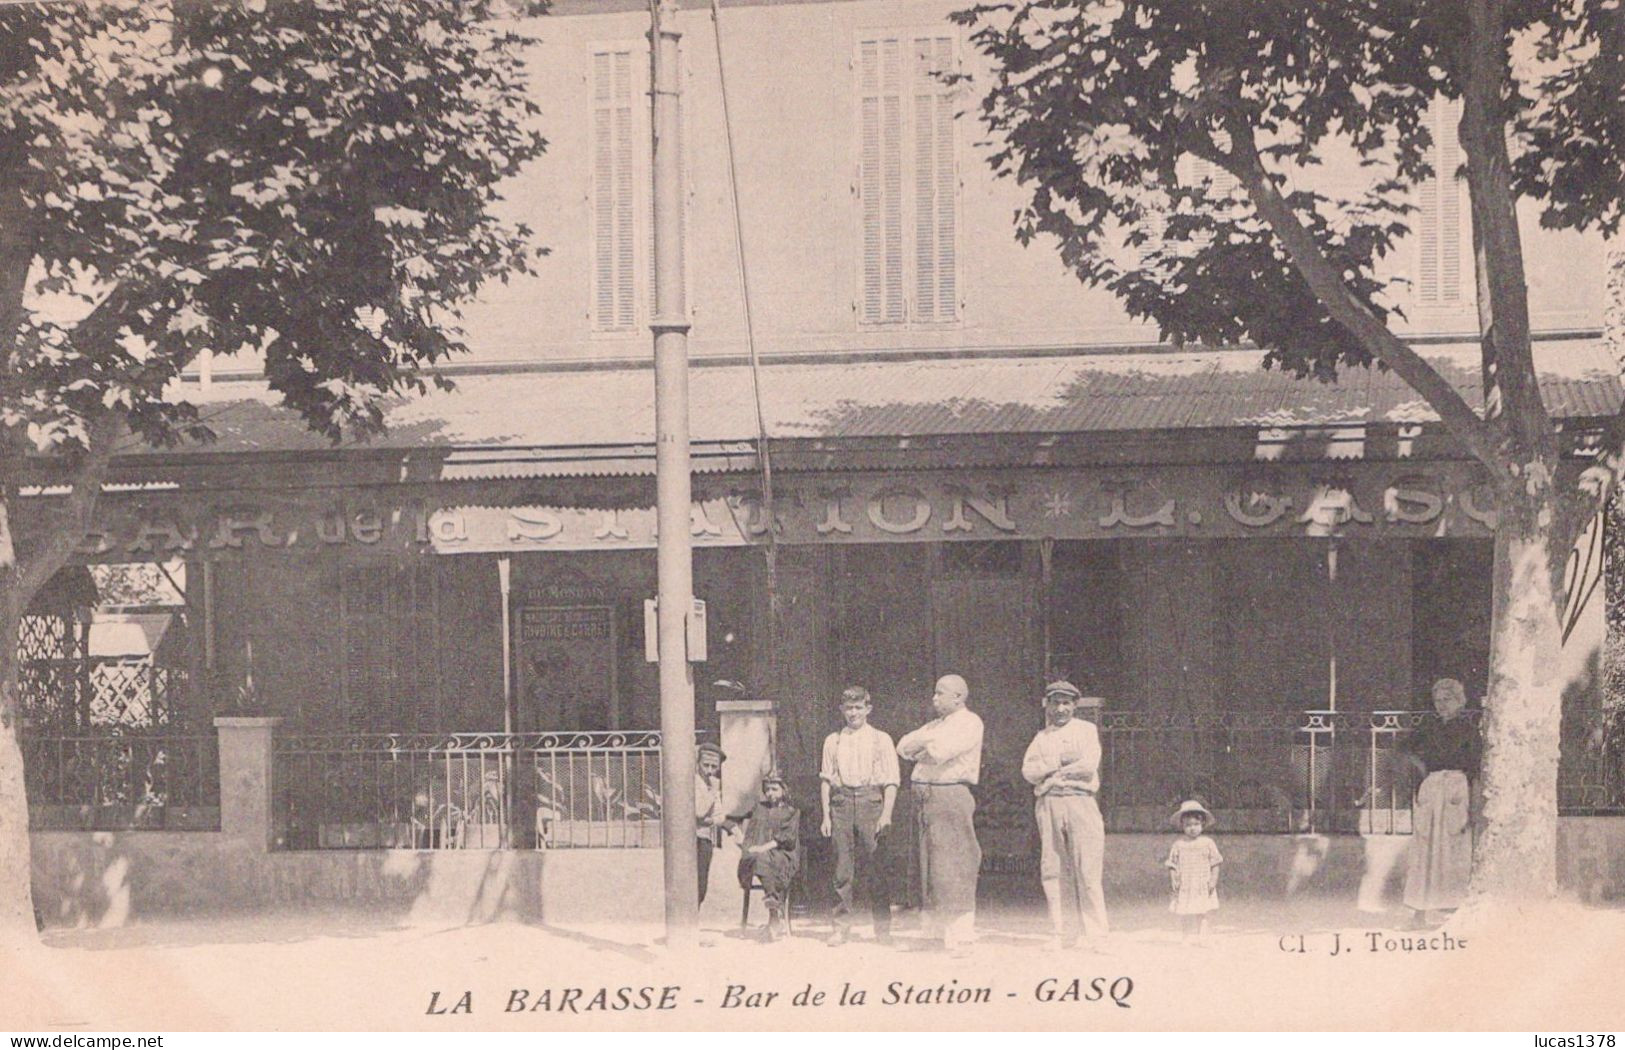 13 / MARSEILLE / LA BARASSE / BAR DE LA STATION / GASQ - Saint Marcel, La Barasse, St Menet